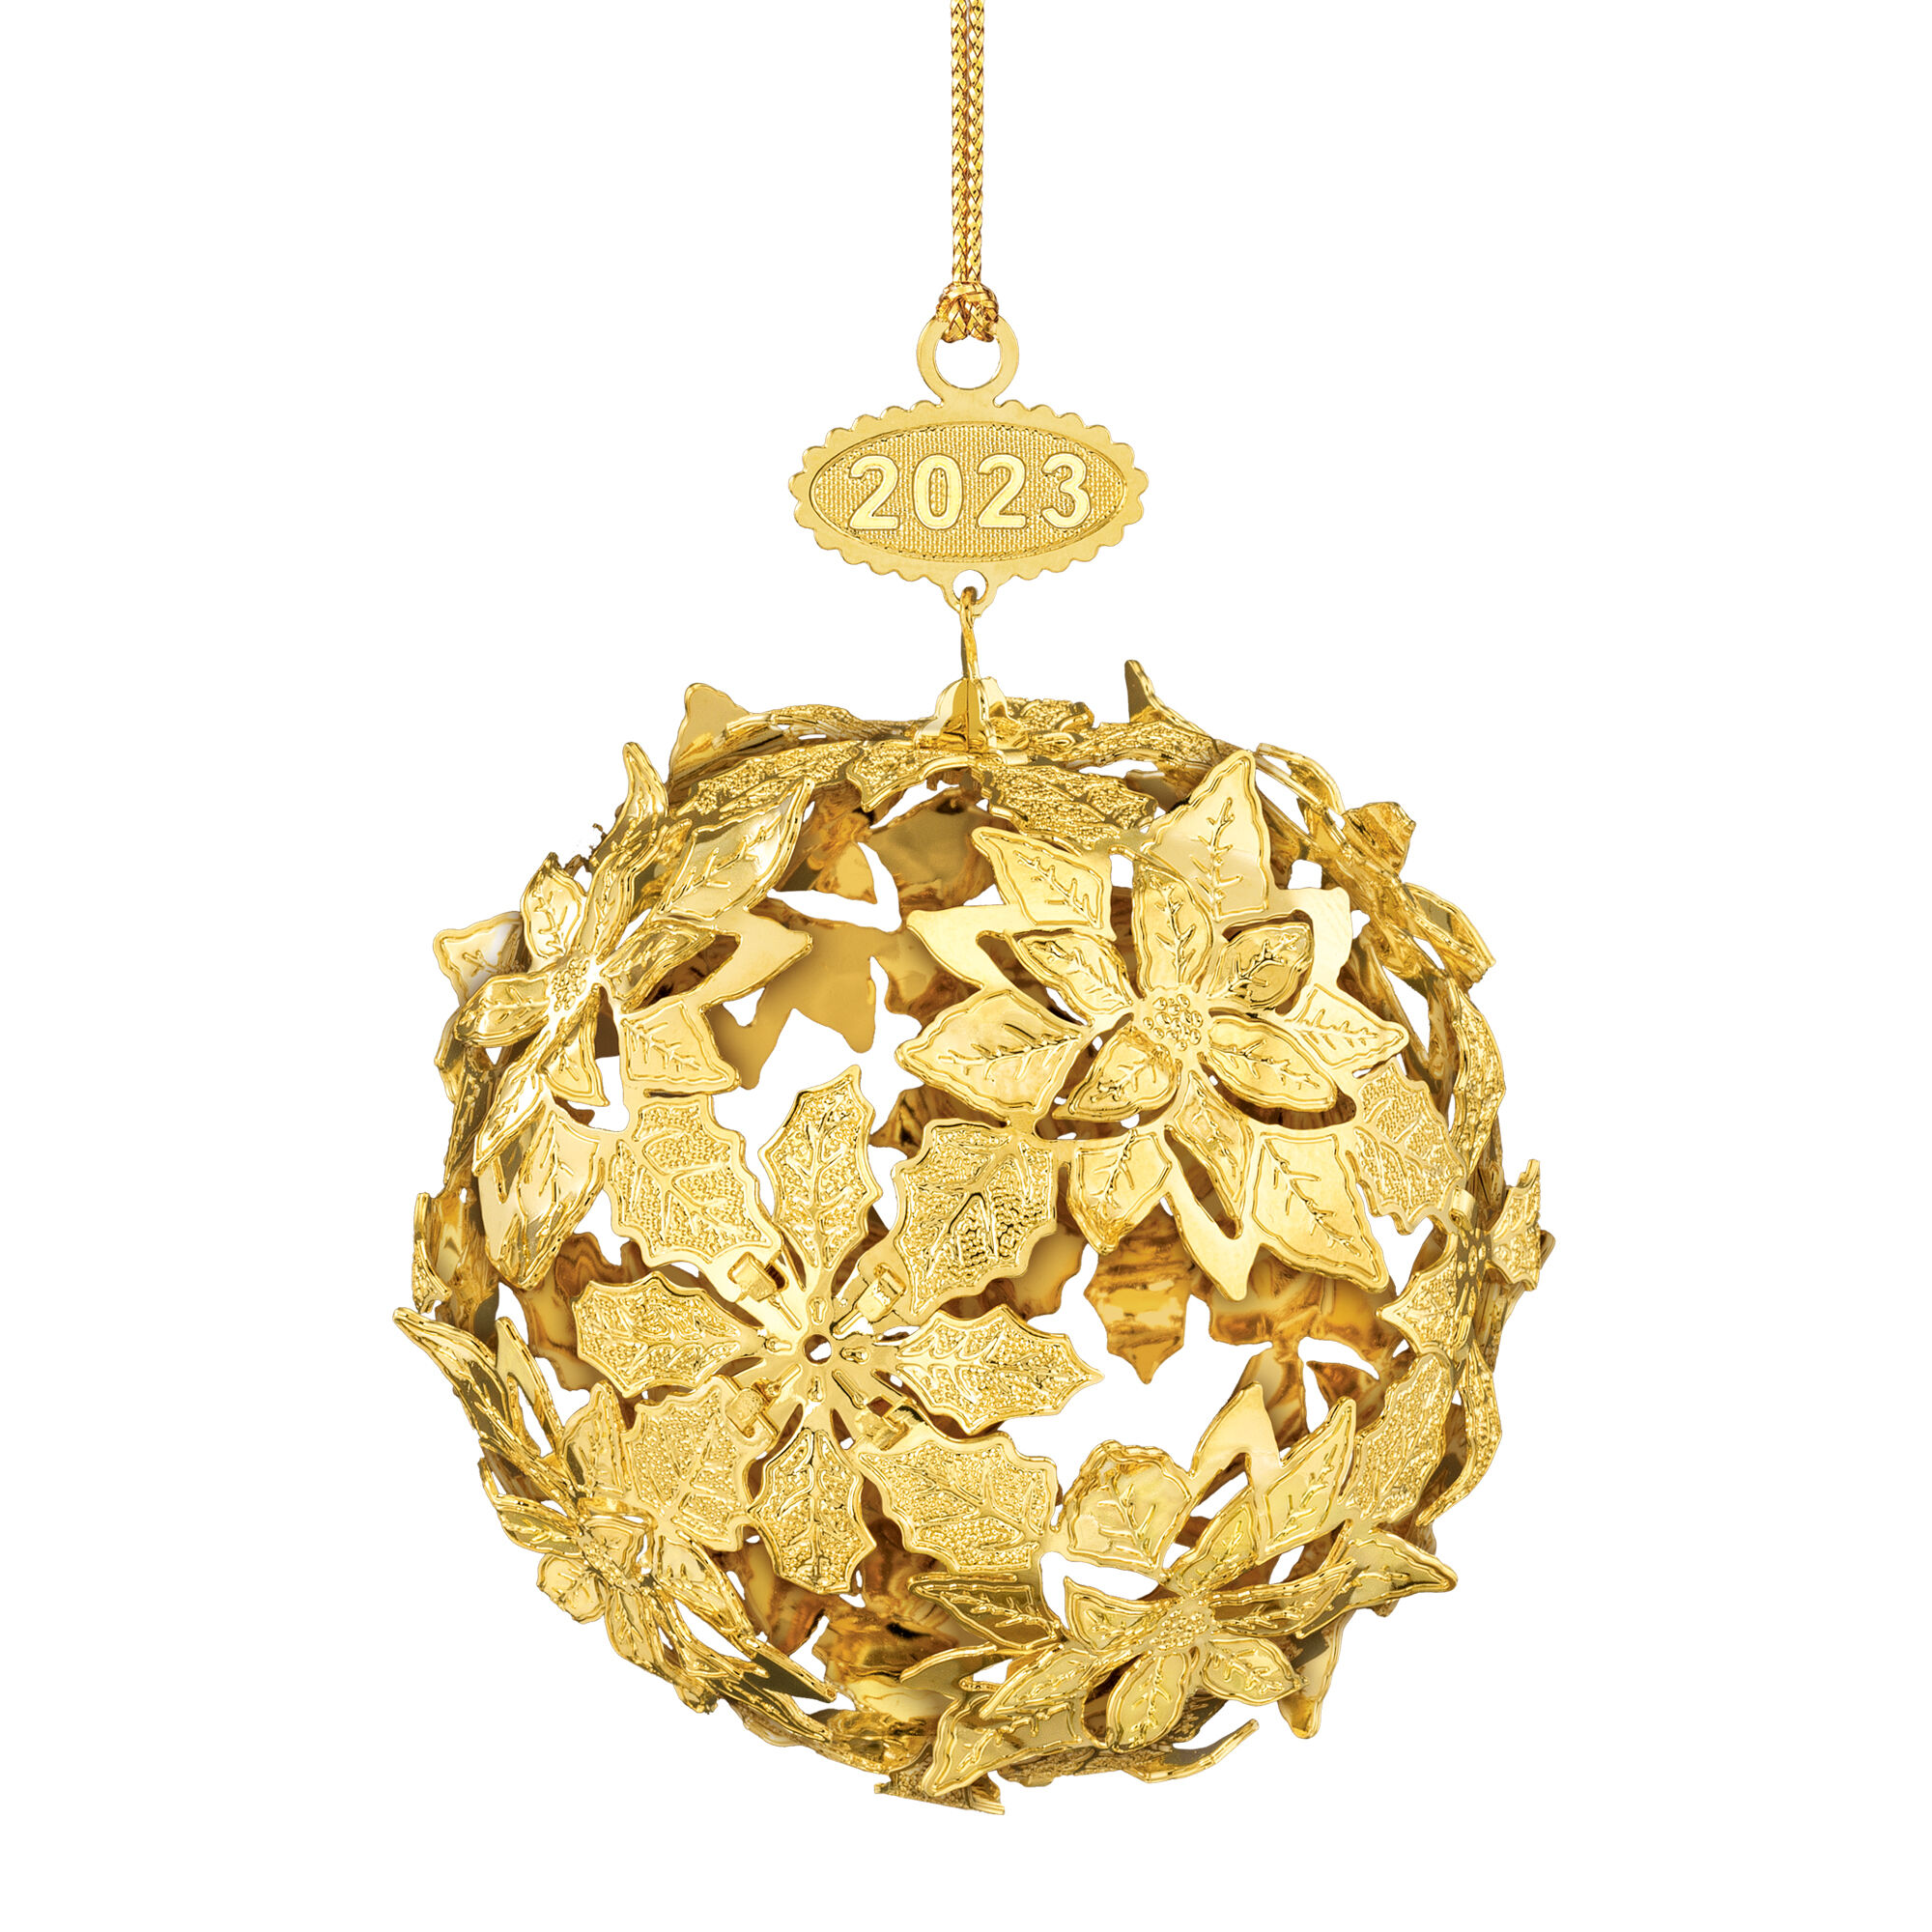 2023 Annual Gold Christmas Ornament 11092 0030 a main